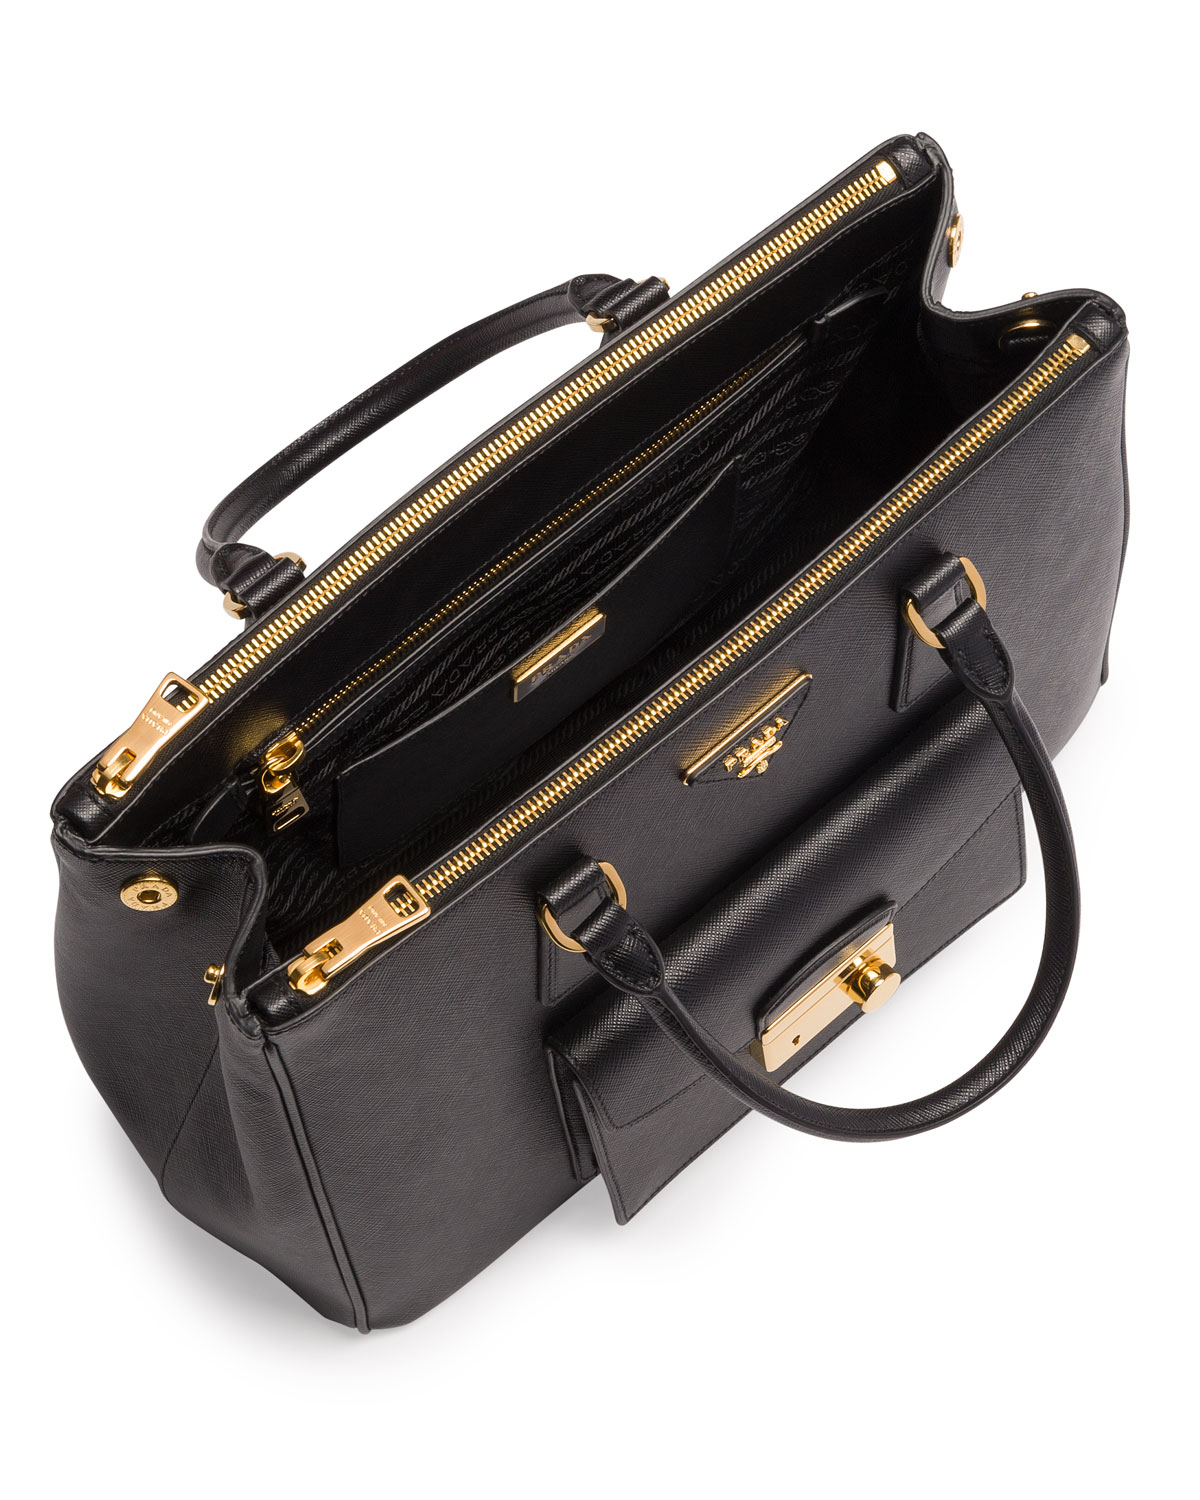 Prada Saffiano Front-Pocket Tote Bag in Black | Lyst  